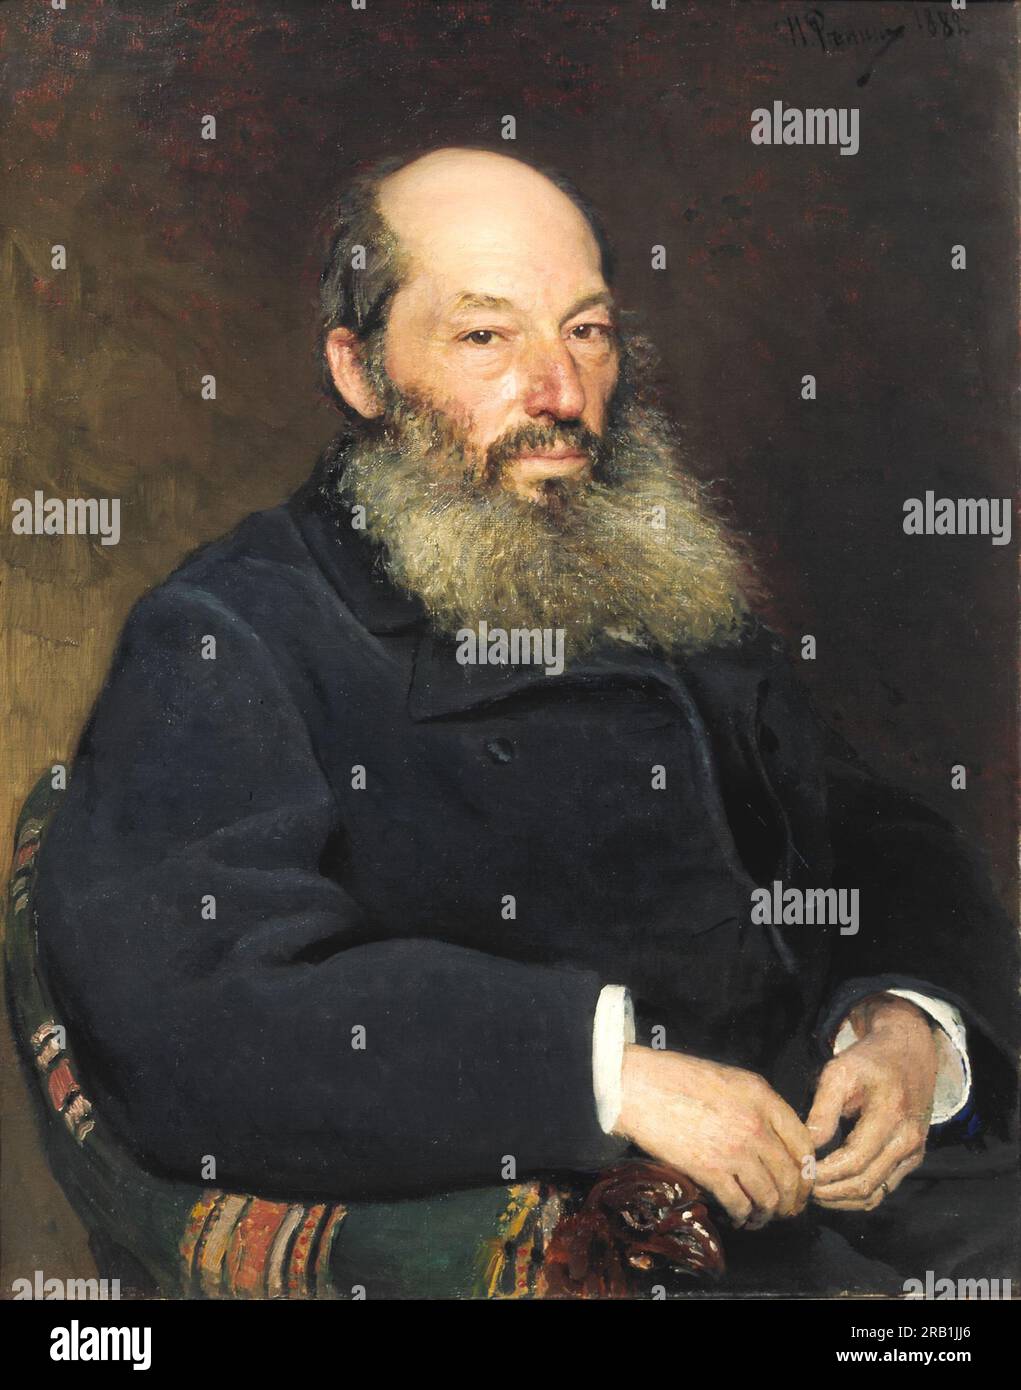 Afanasy Afanasyevich Fet (Shenshin) 1820 – 1892), renowned Russian poet regarded. Portrait by Ilya Repin Stock Photo